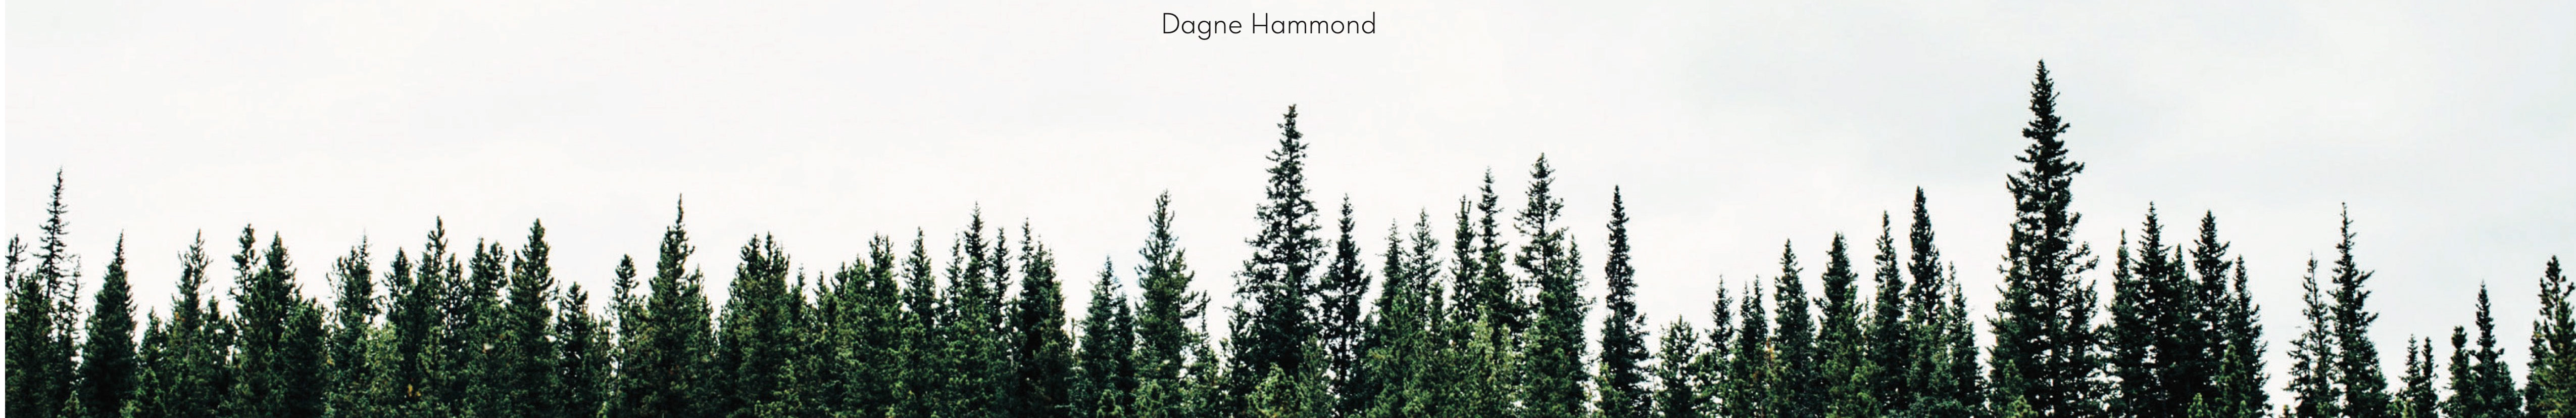 Dagne Storm Hammond's profile banner